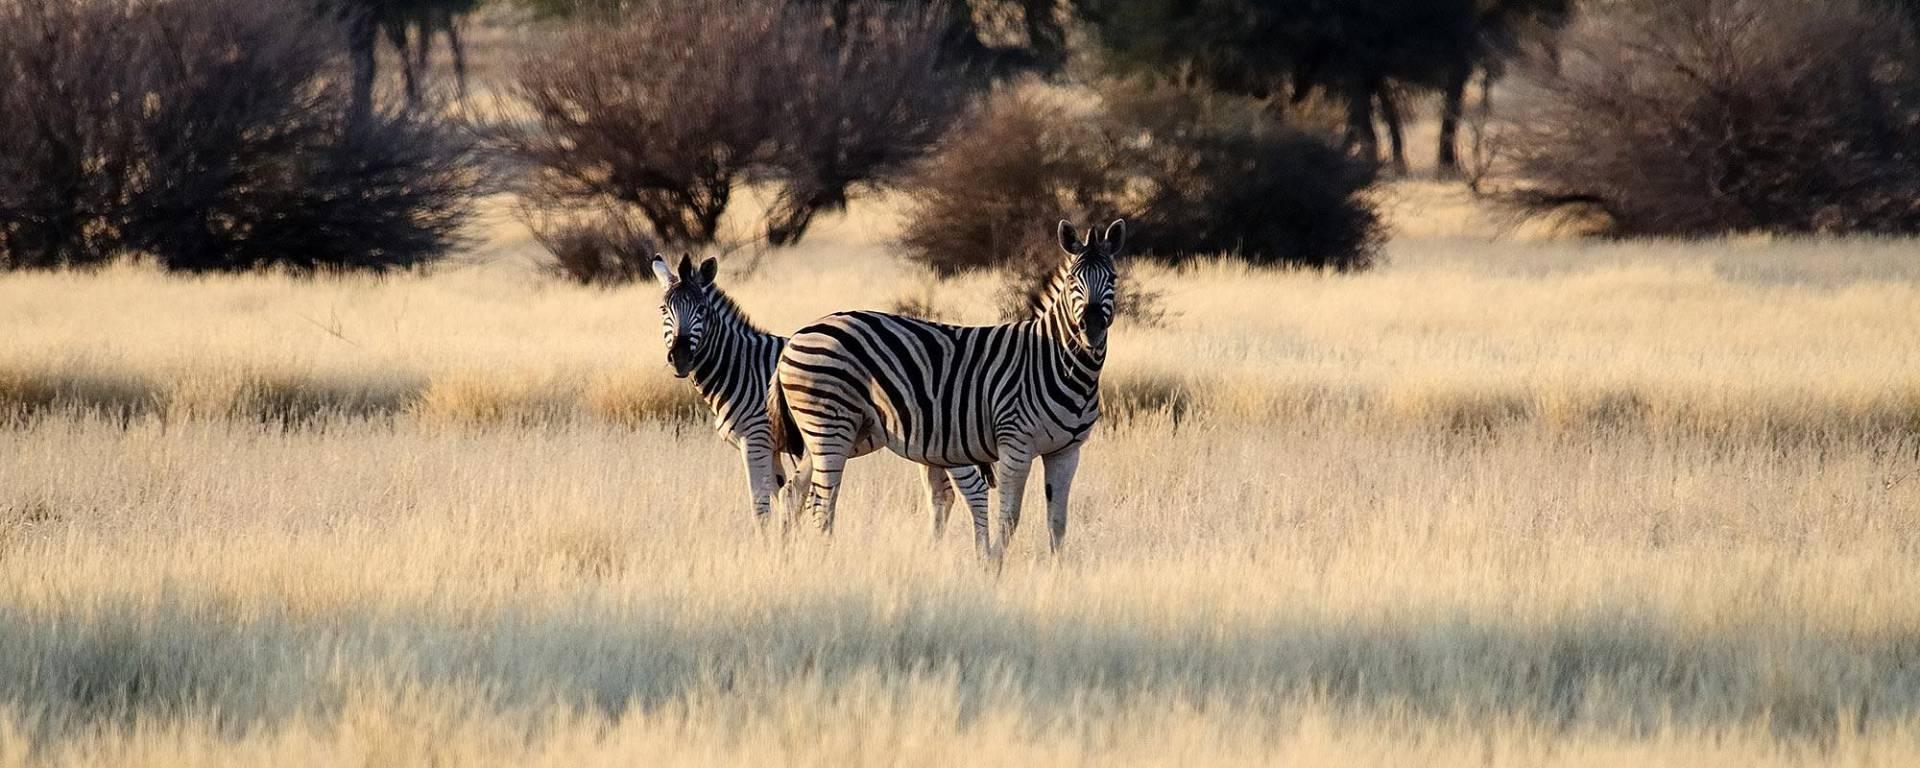 Zebra in the Namibian savanna